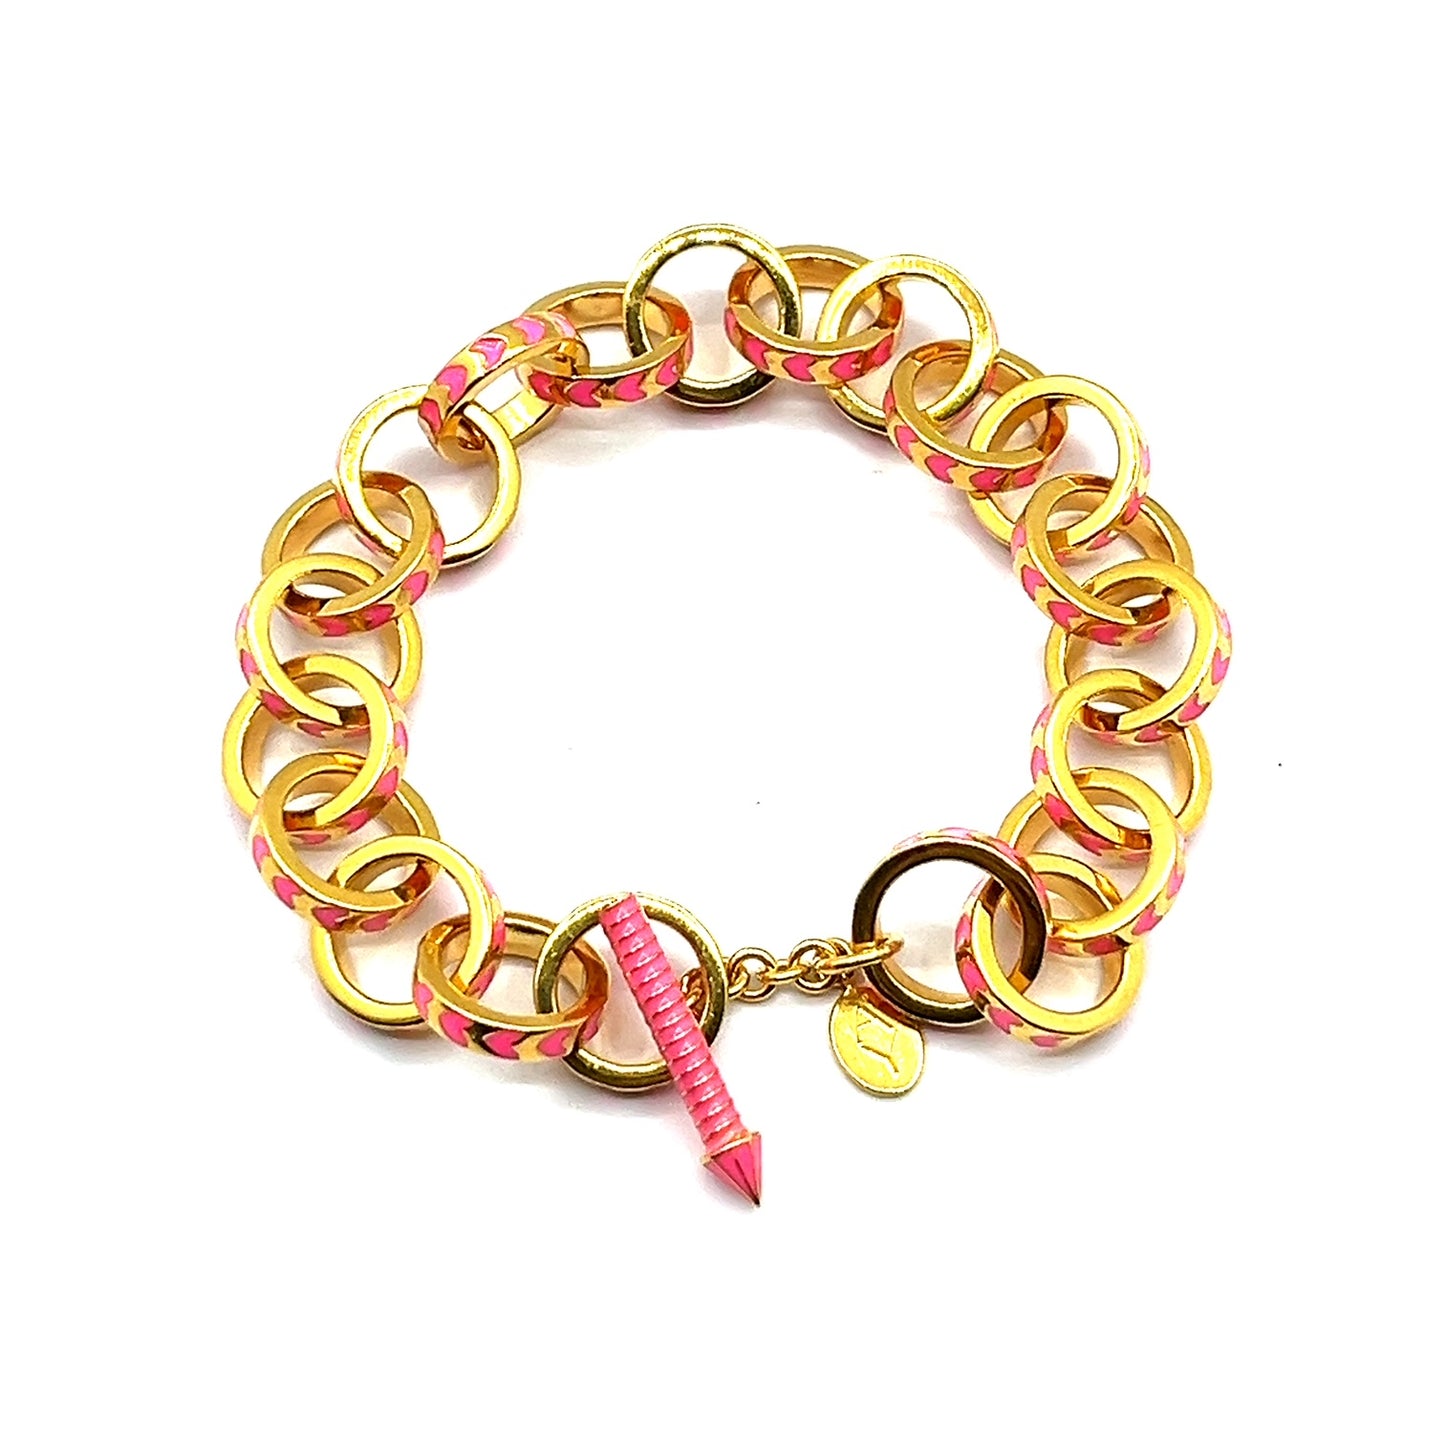 Contemporary Chain Link Bracelet